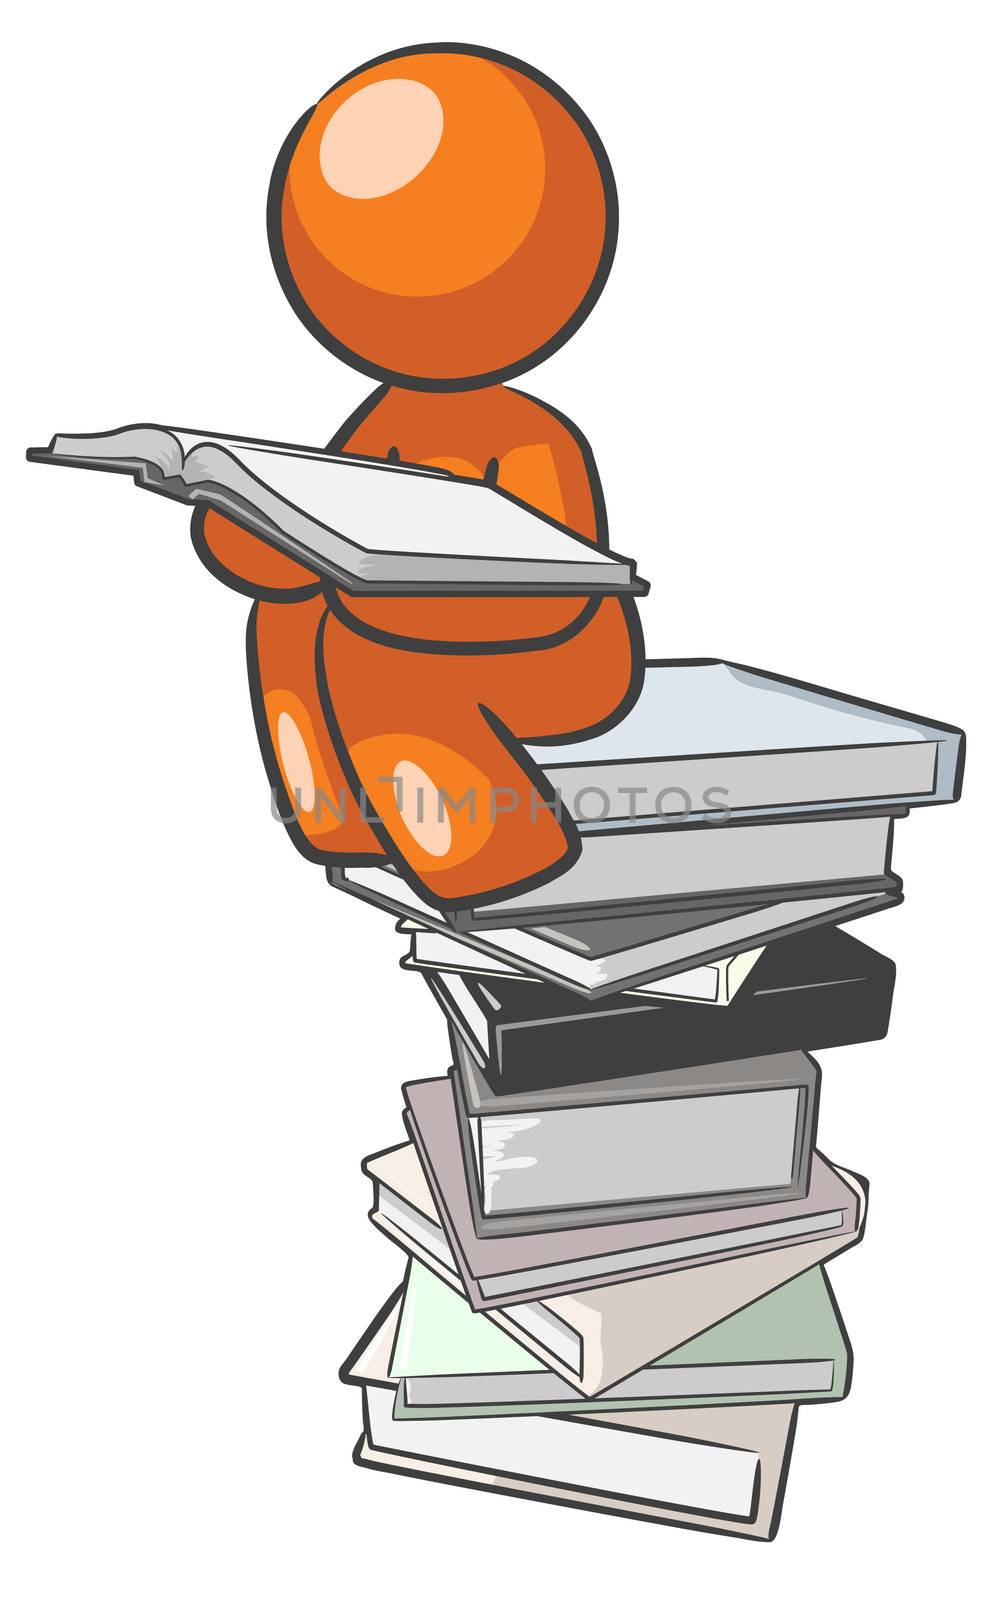 A design mascot sitting on books educating himself.